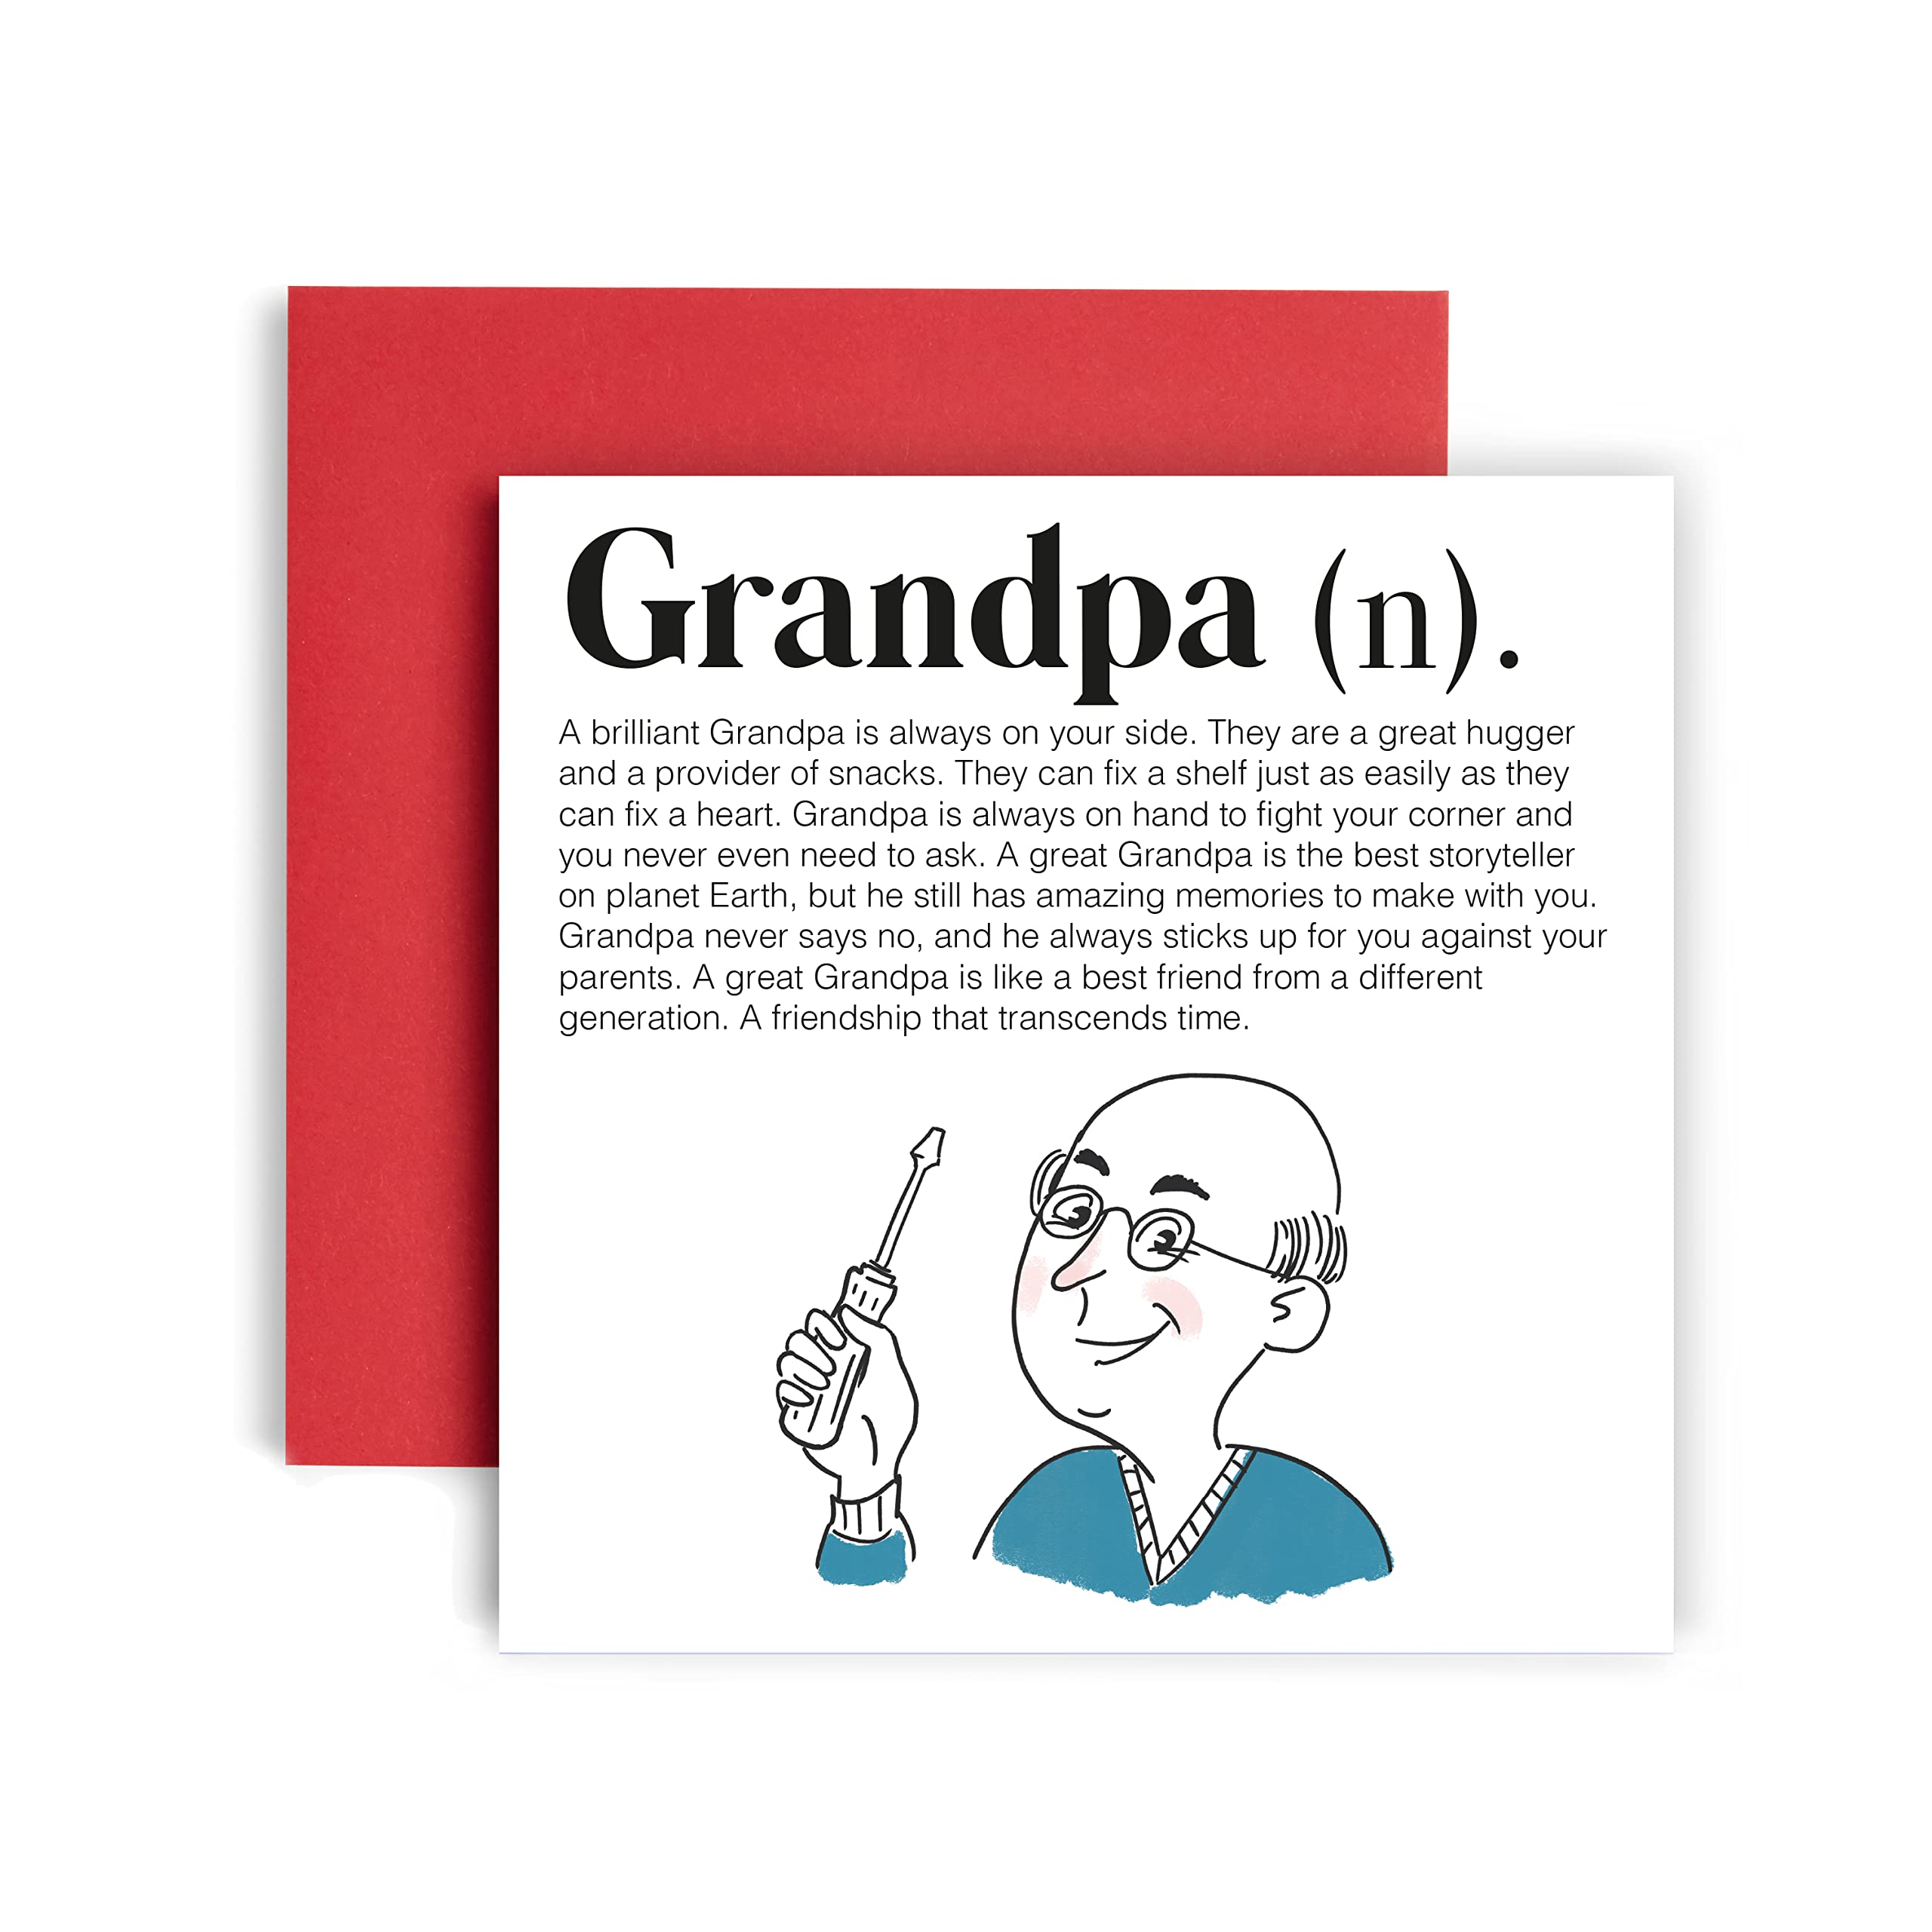 Grandfather reading a heartfelt card